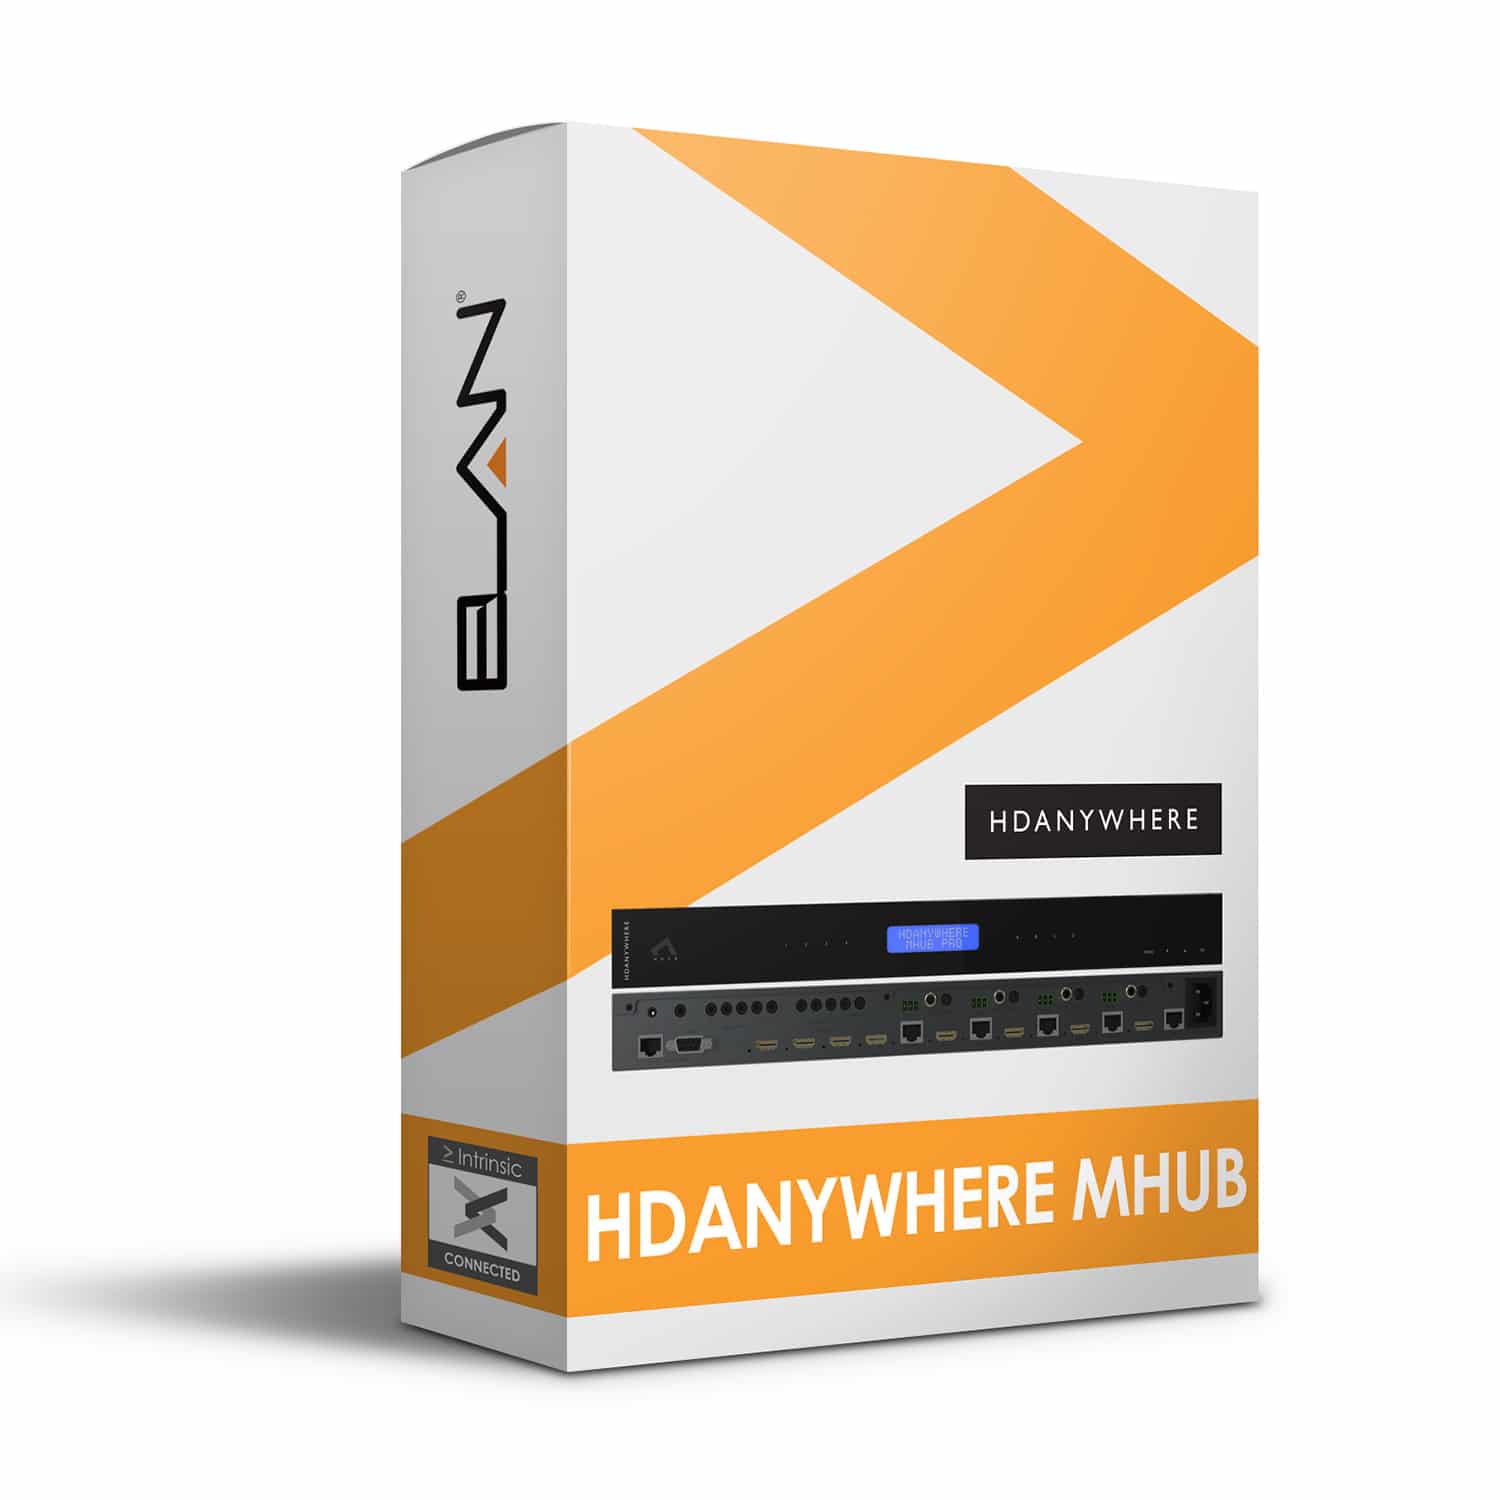 hdanywhere mhub 8x8 IP driver for elan